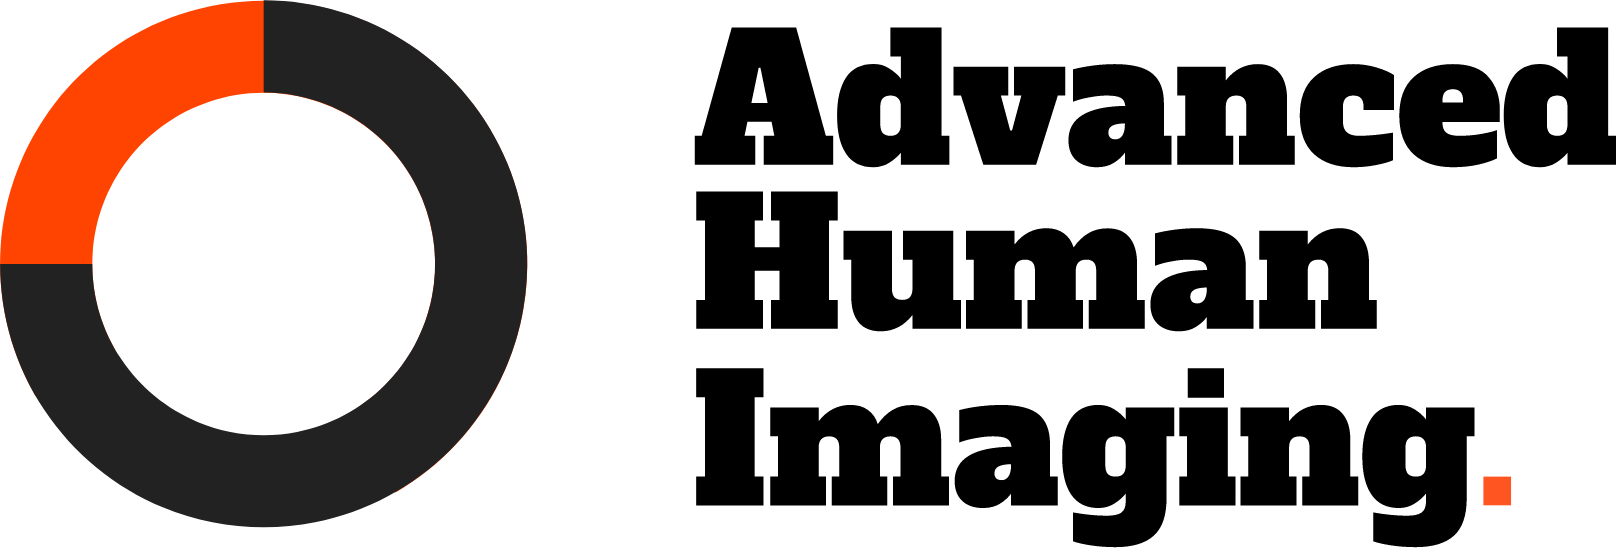 Advanced Health Intelligence logo large (transparent PNG)